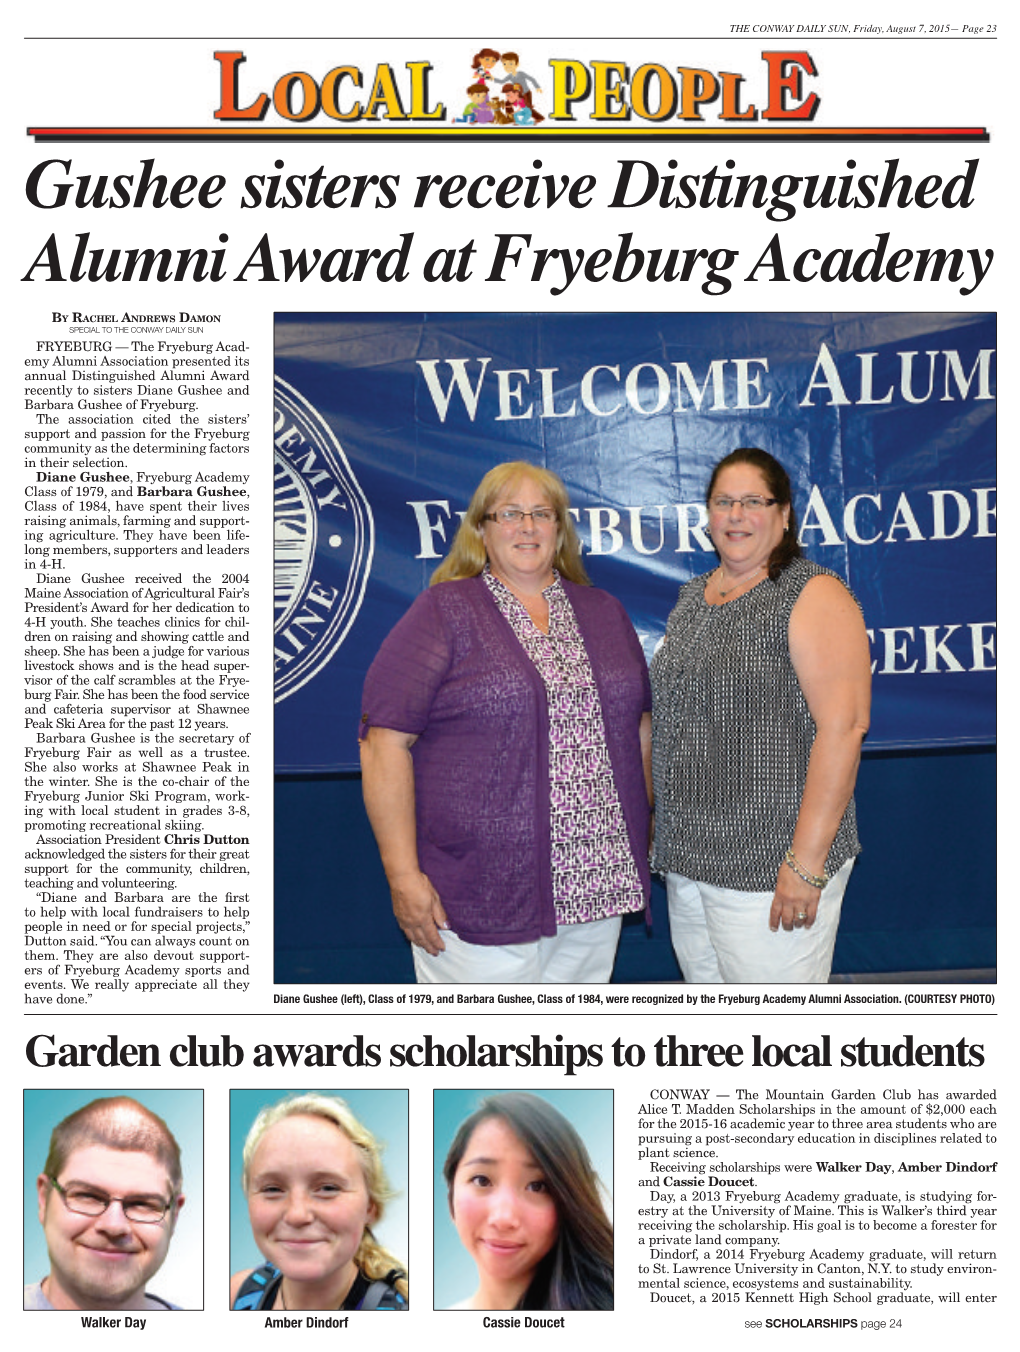 Gushee Sisters Receive Distinguished Alumni Award at Fryeburg Academy